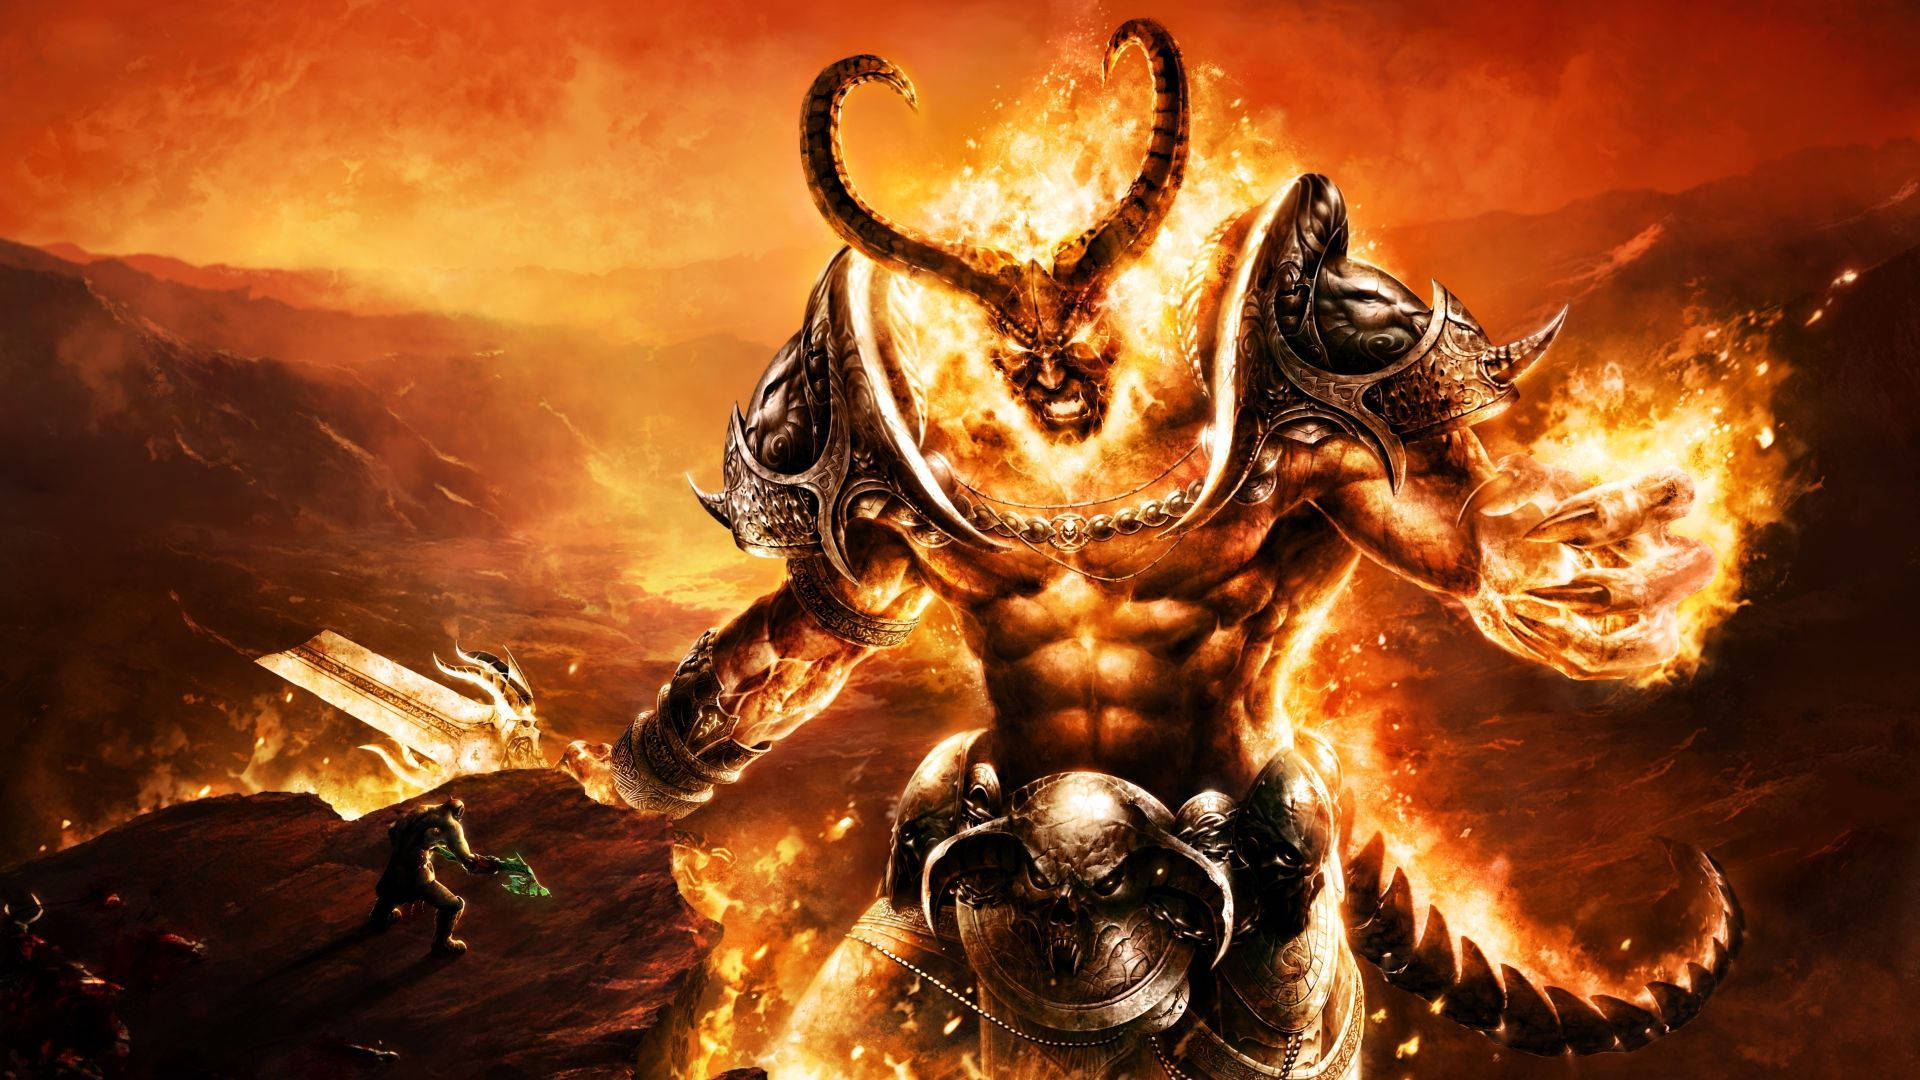 Evil Giant Monster Flaming Background